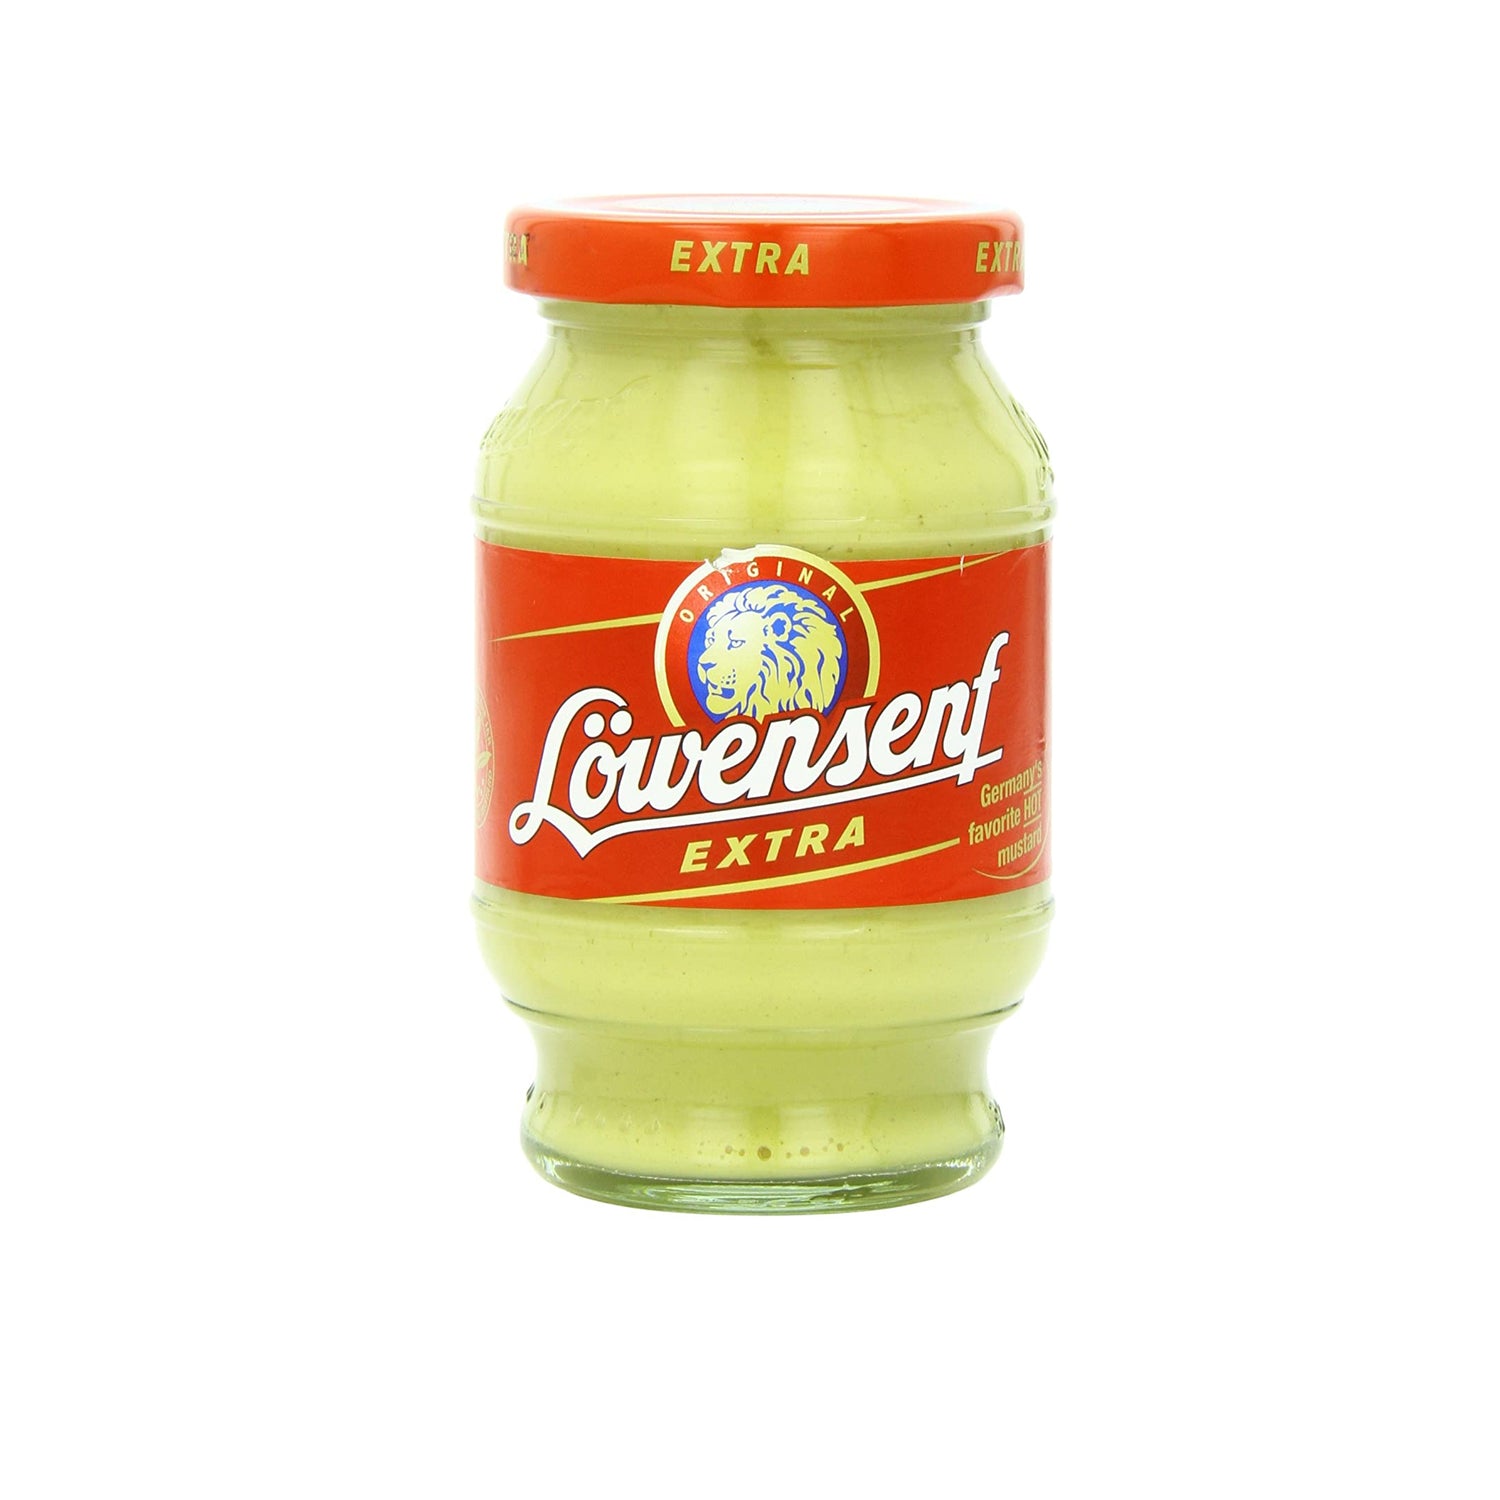 lowensenf mustard extra hot